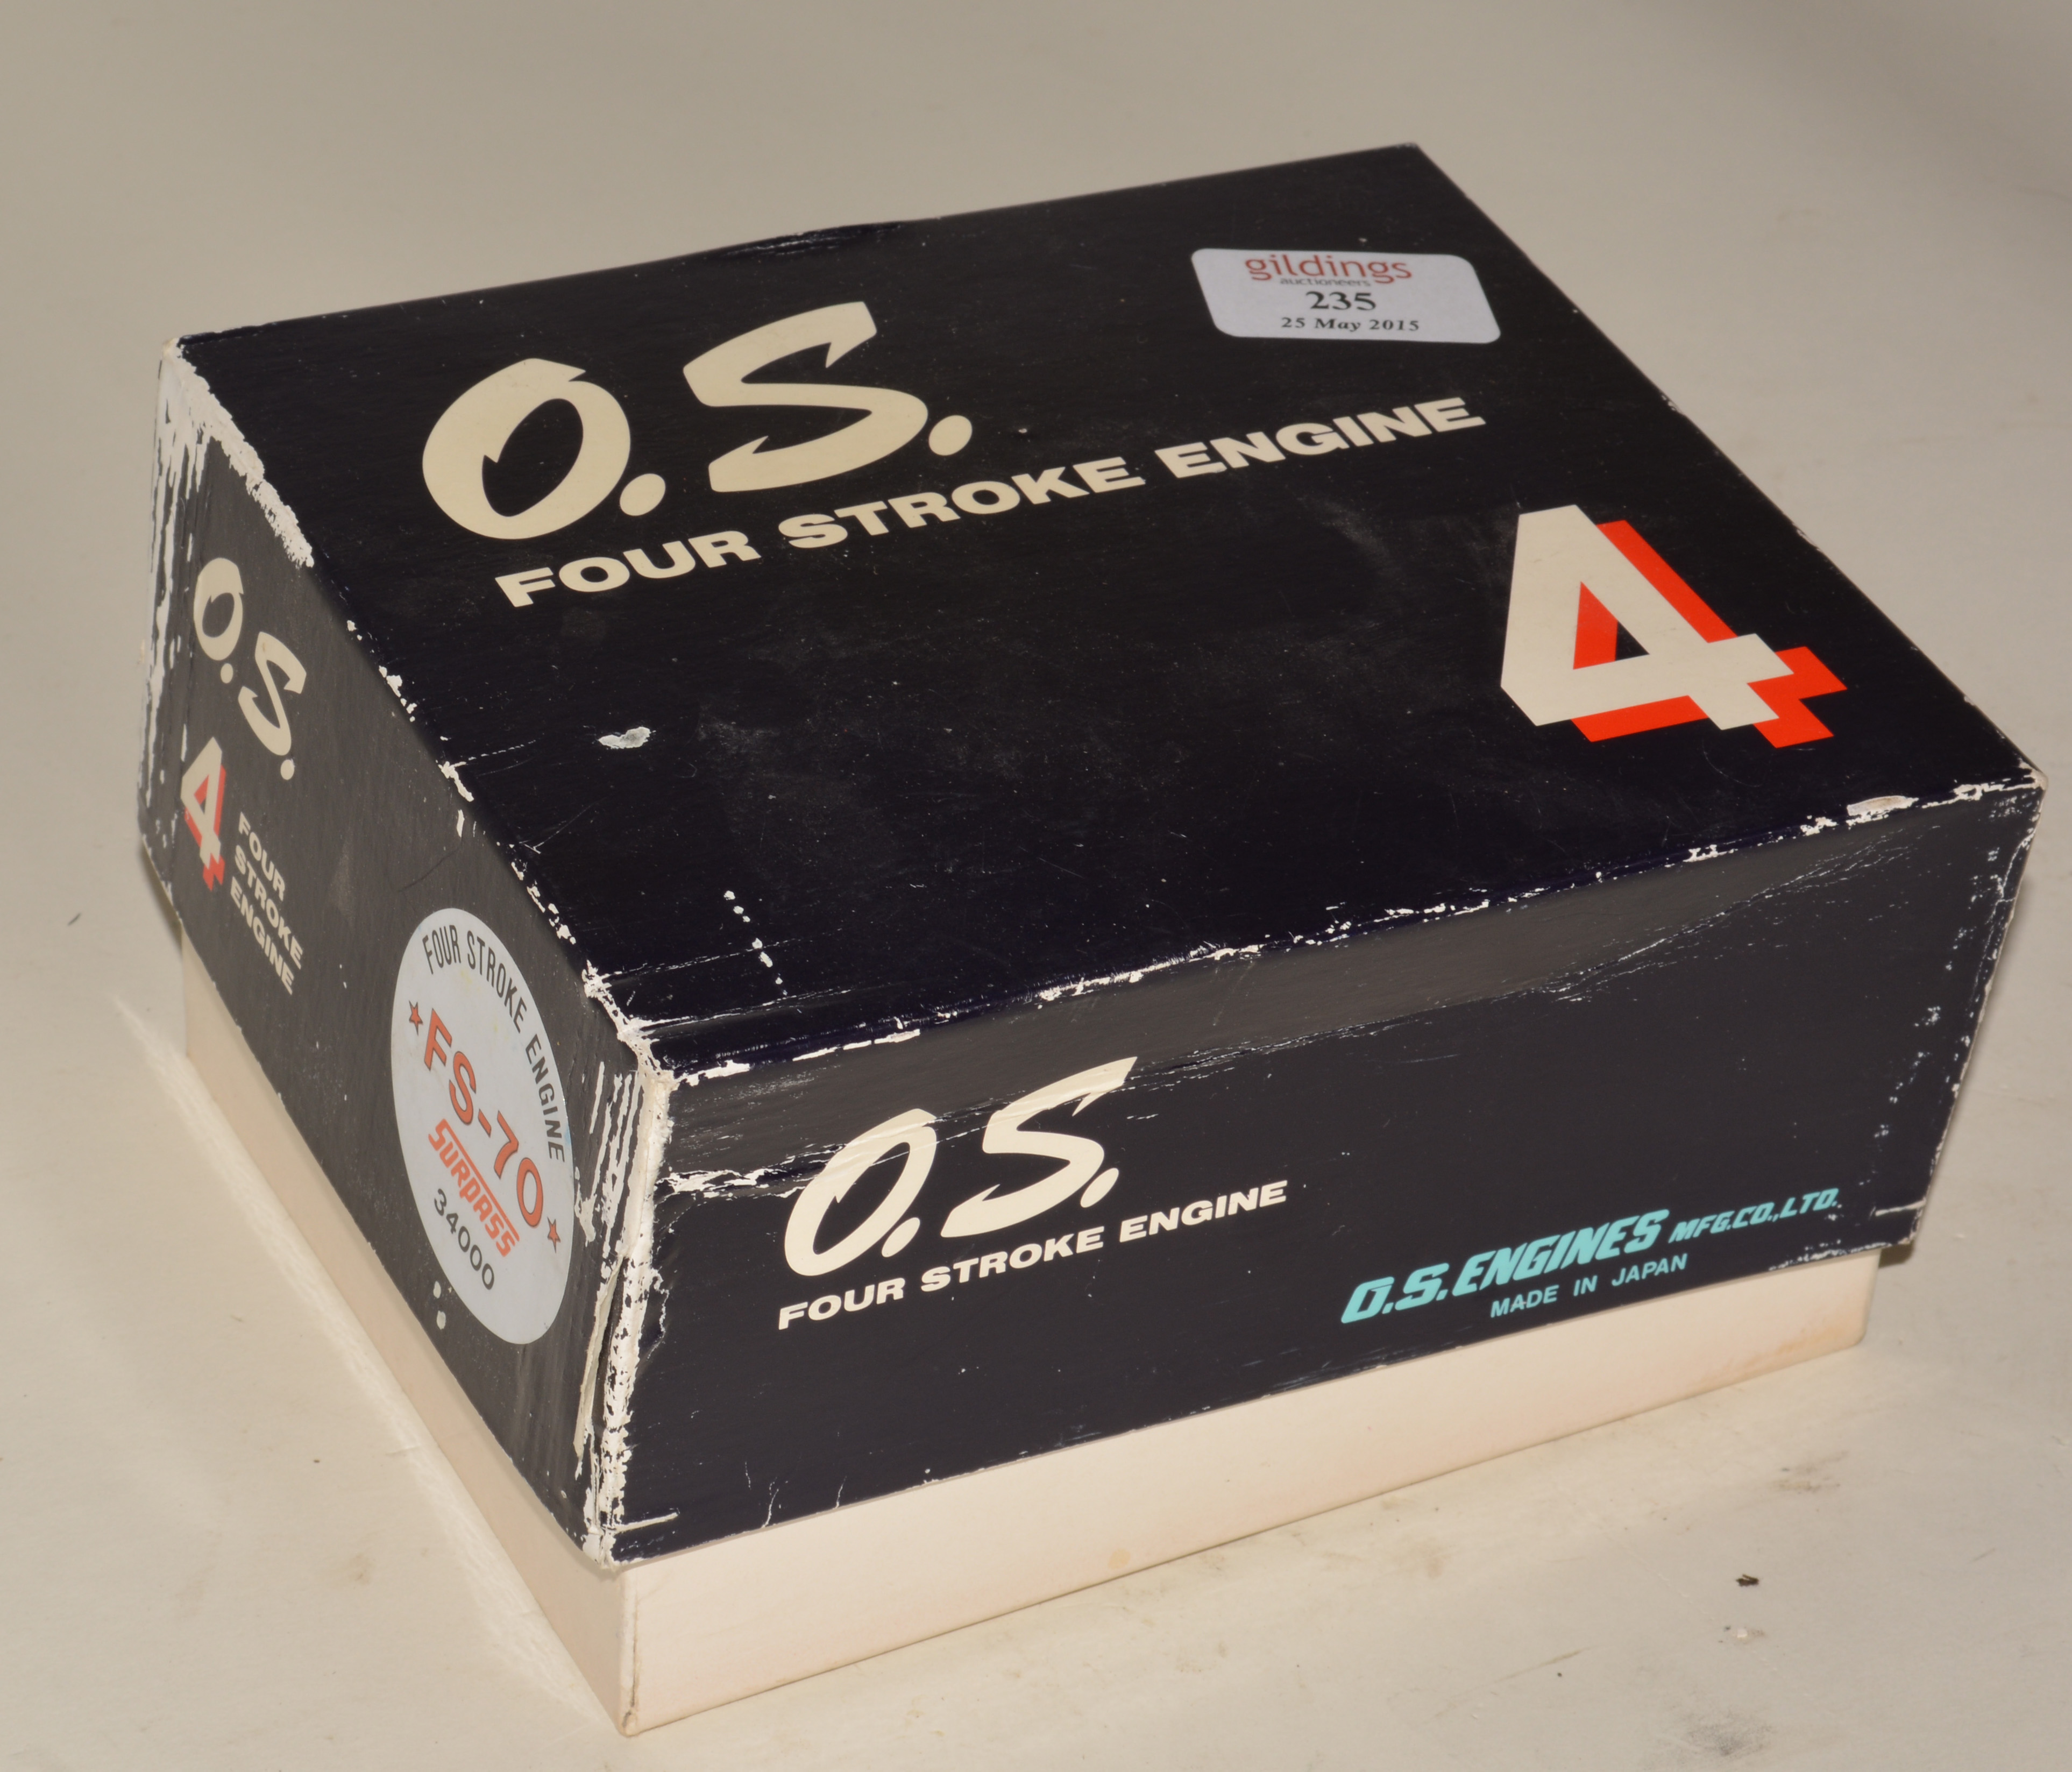 OS 61 F/S, R/C glow engine in a box.